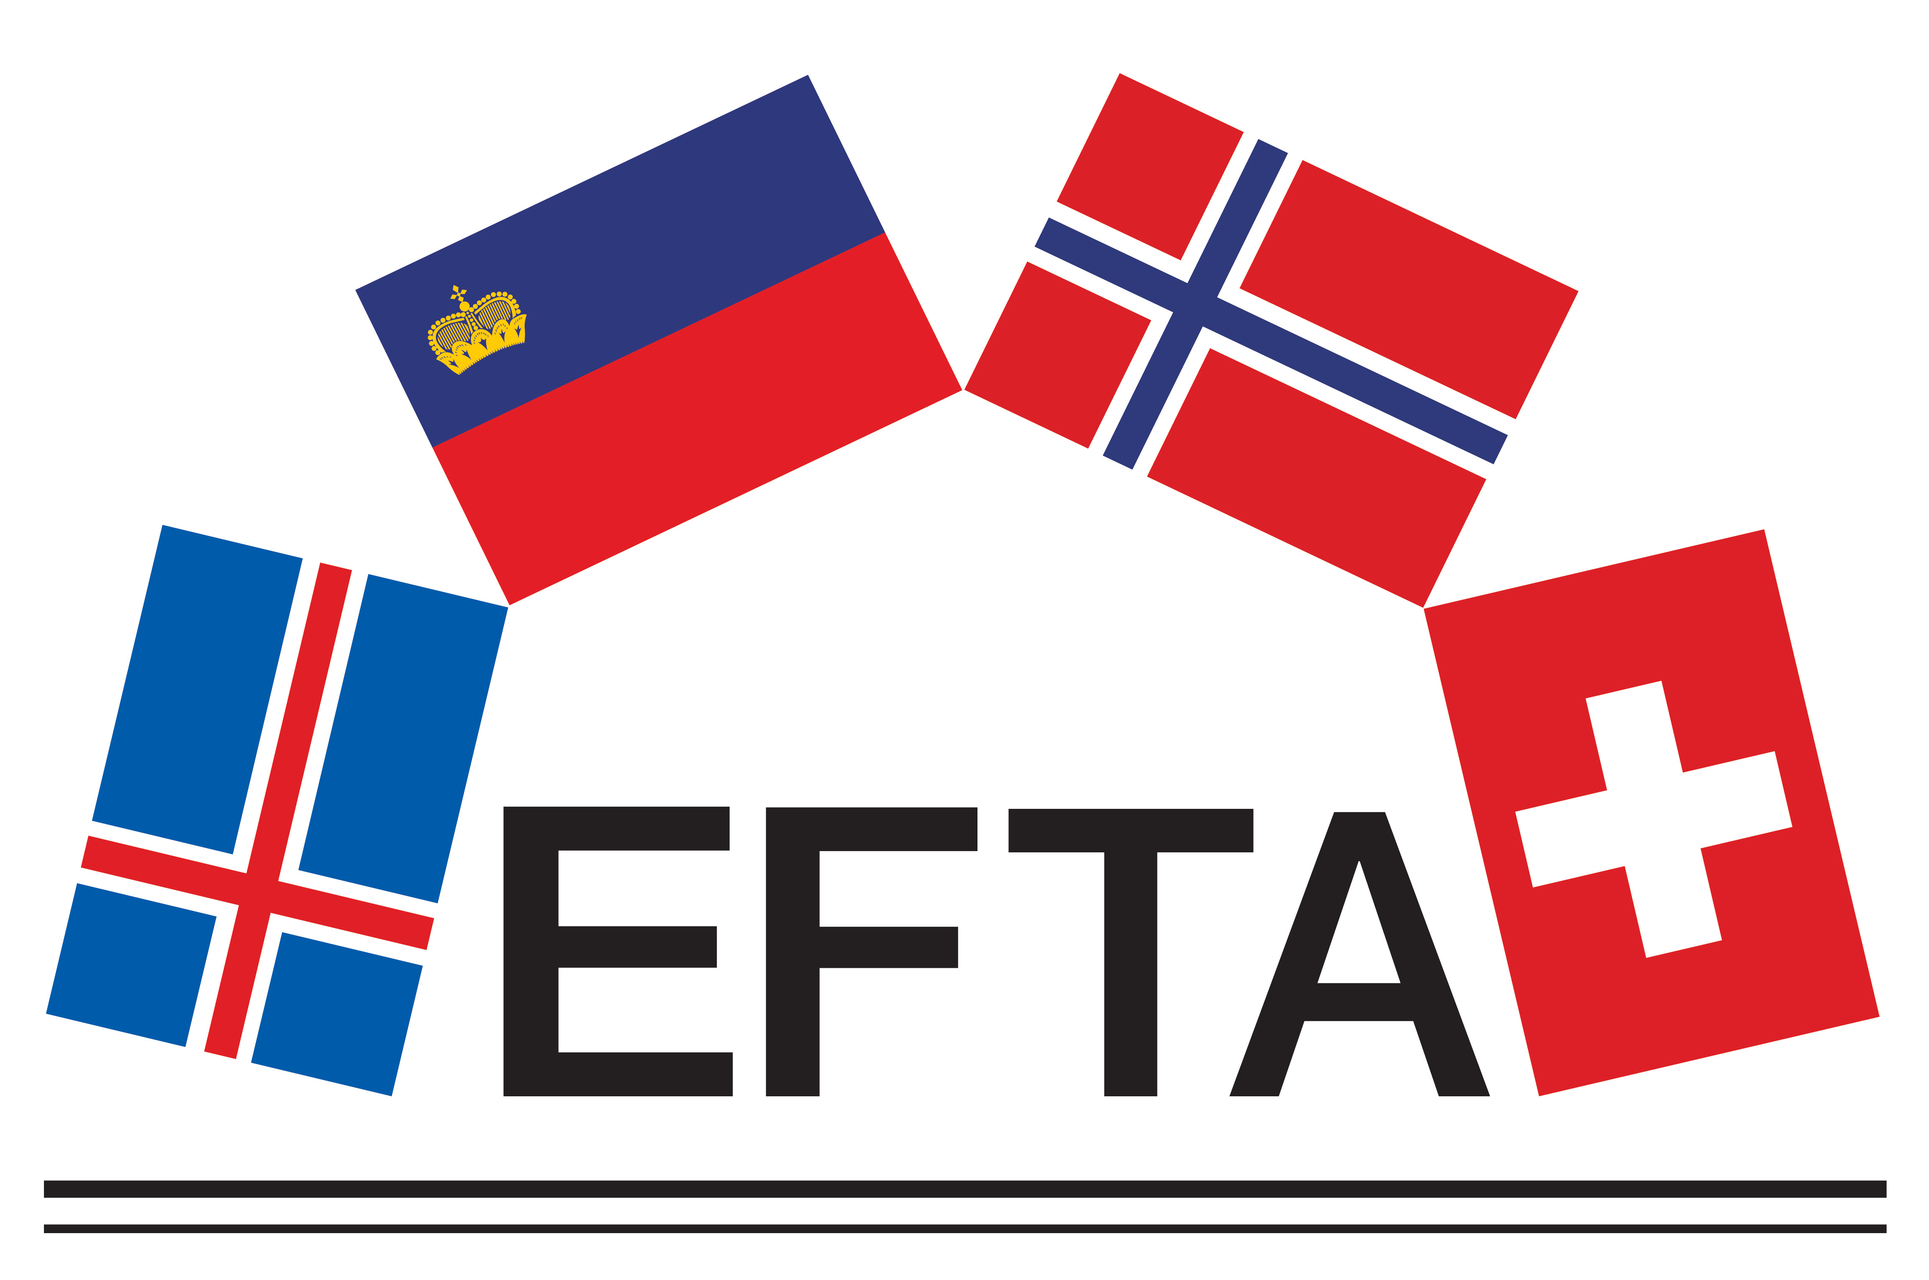 Commercio digitale: il logotipo della European Free Trade Association (EFTA)